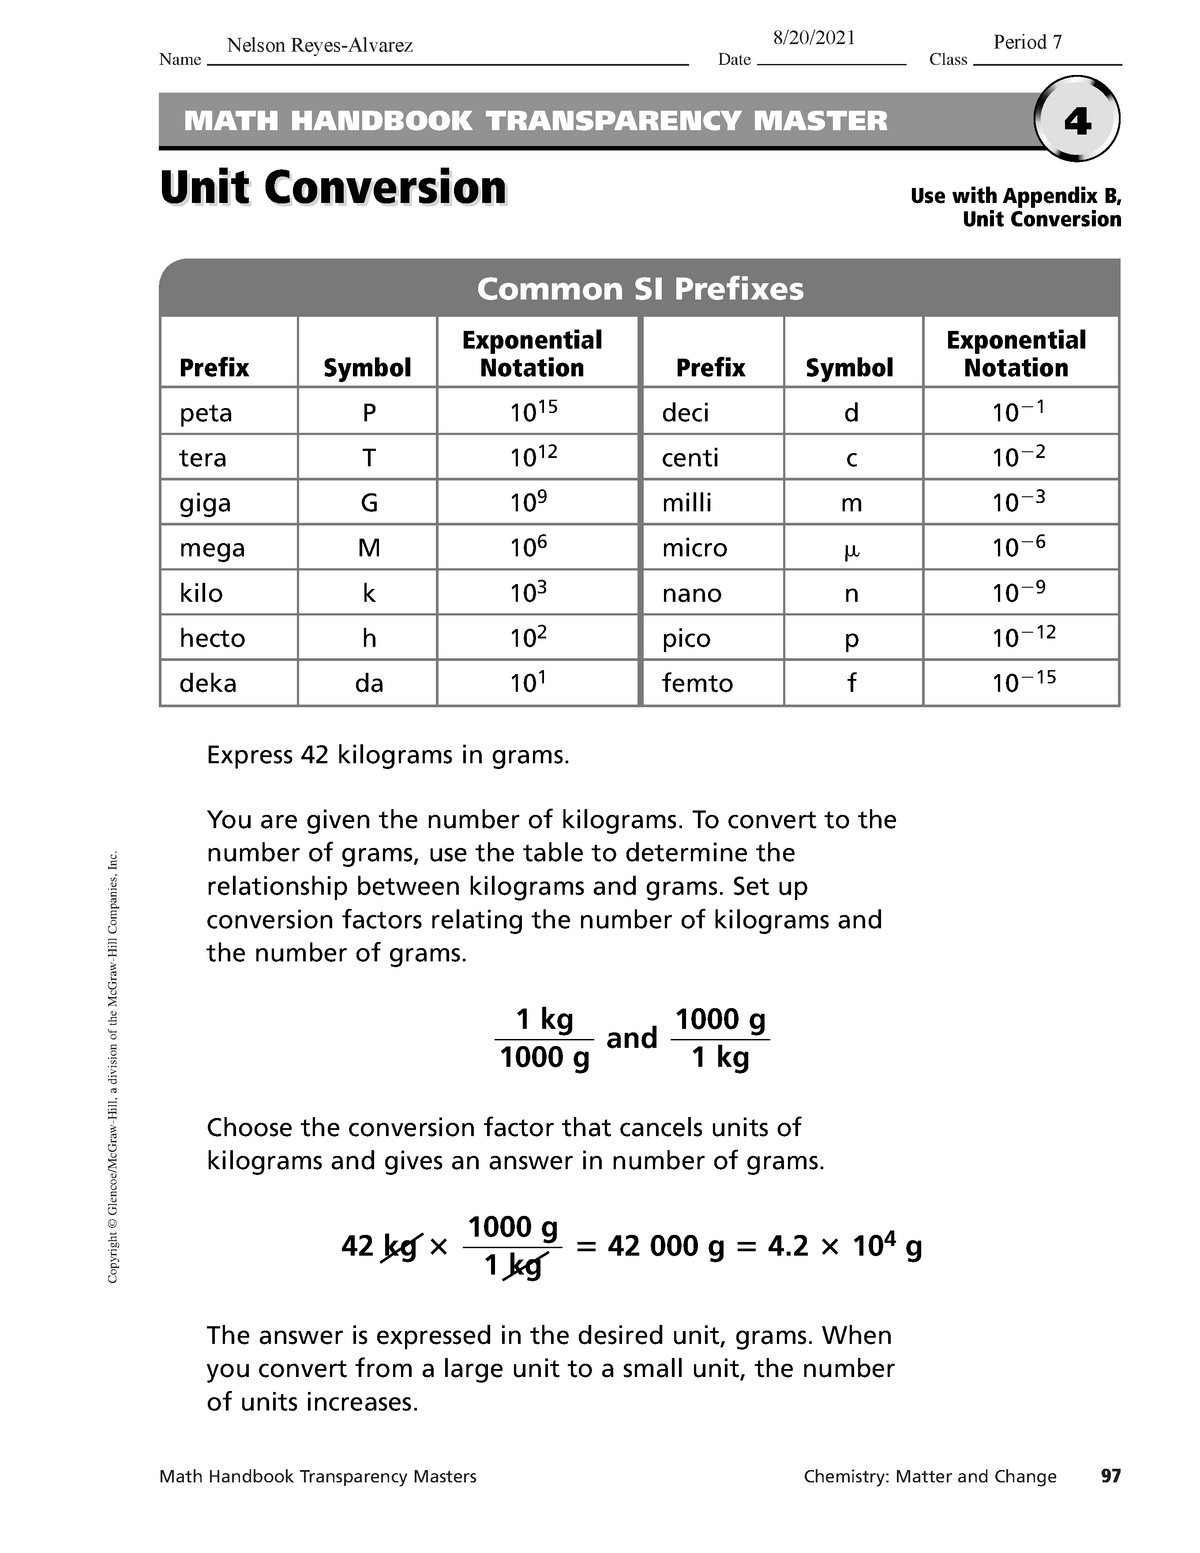 nelson-reyes-alvarez-unit-conversions-math-skills-transparency-masters-copyright-studocu-math